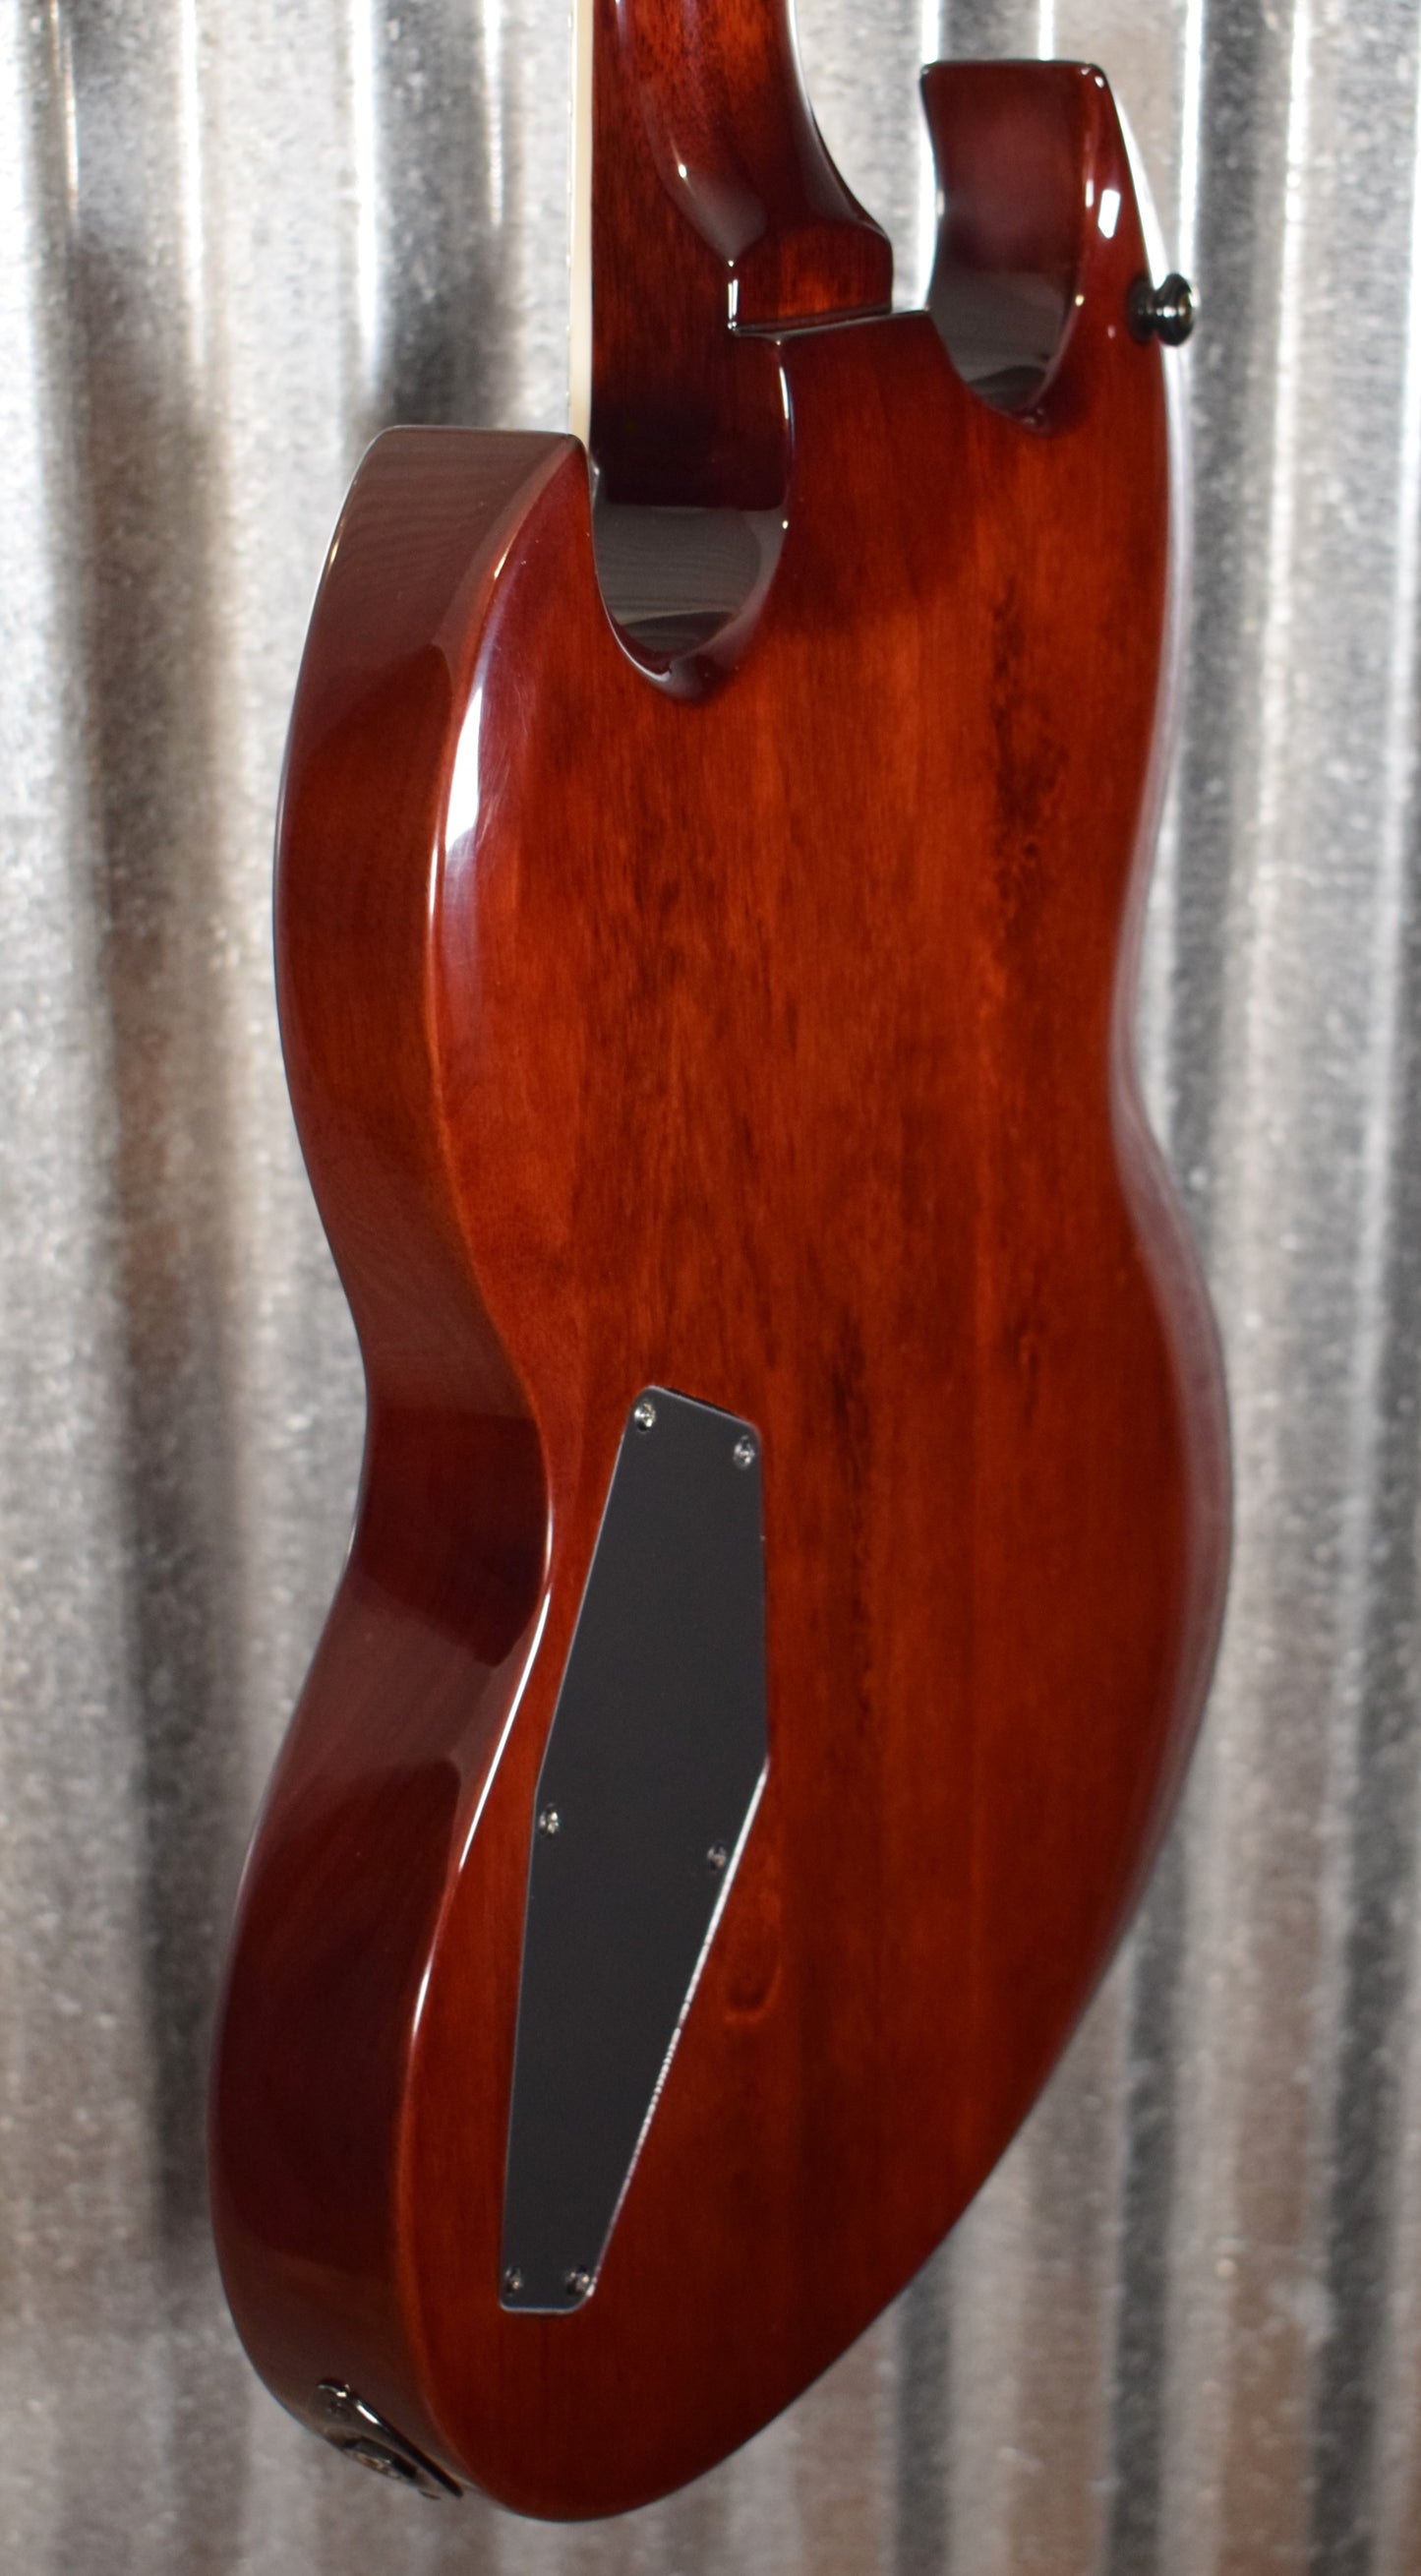 ESP LTD Viper 256 Dark Brown Burst Guitar & Bag LVIPER256QMDBSB #1131